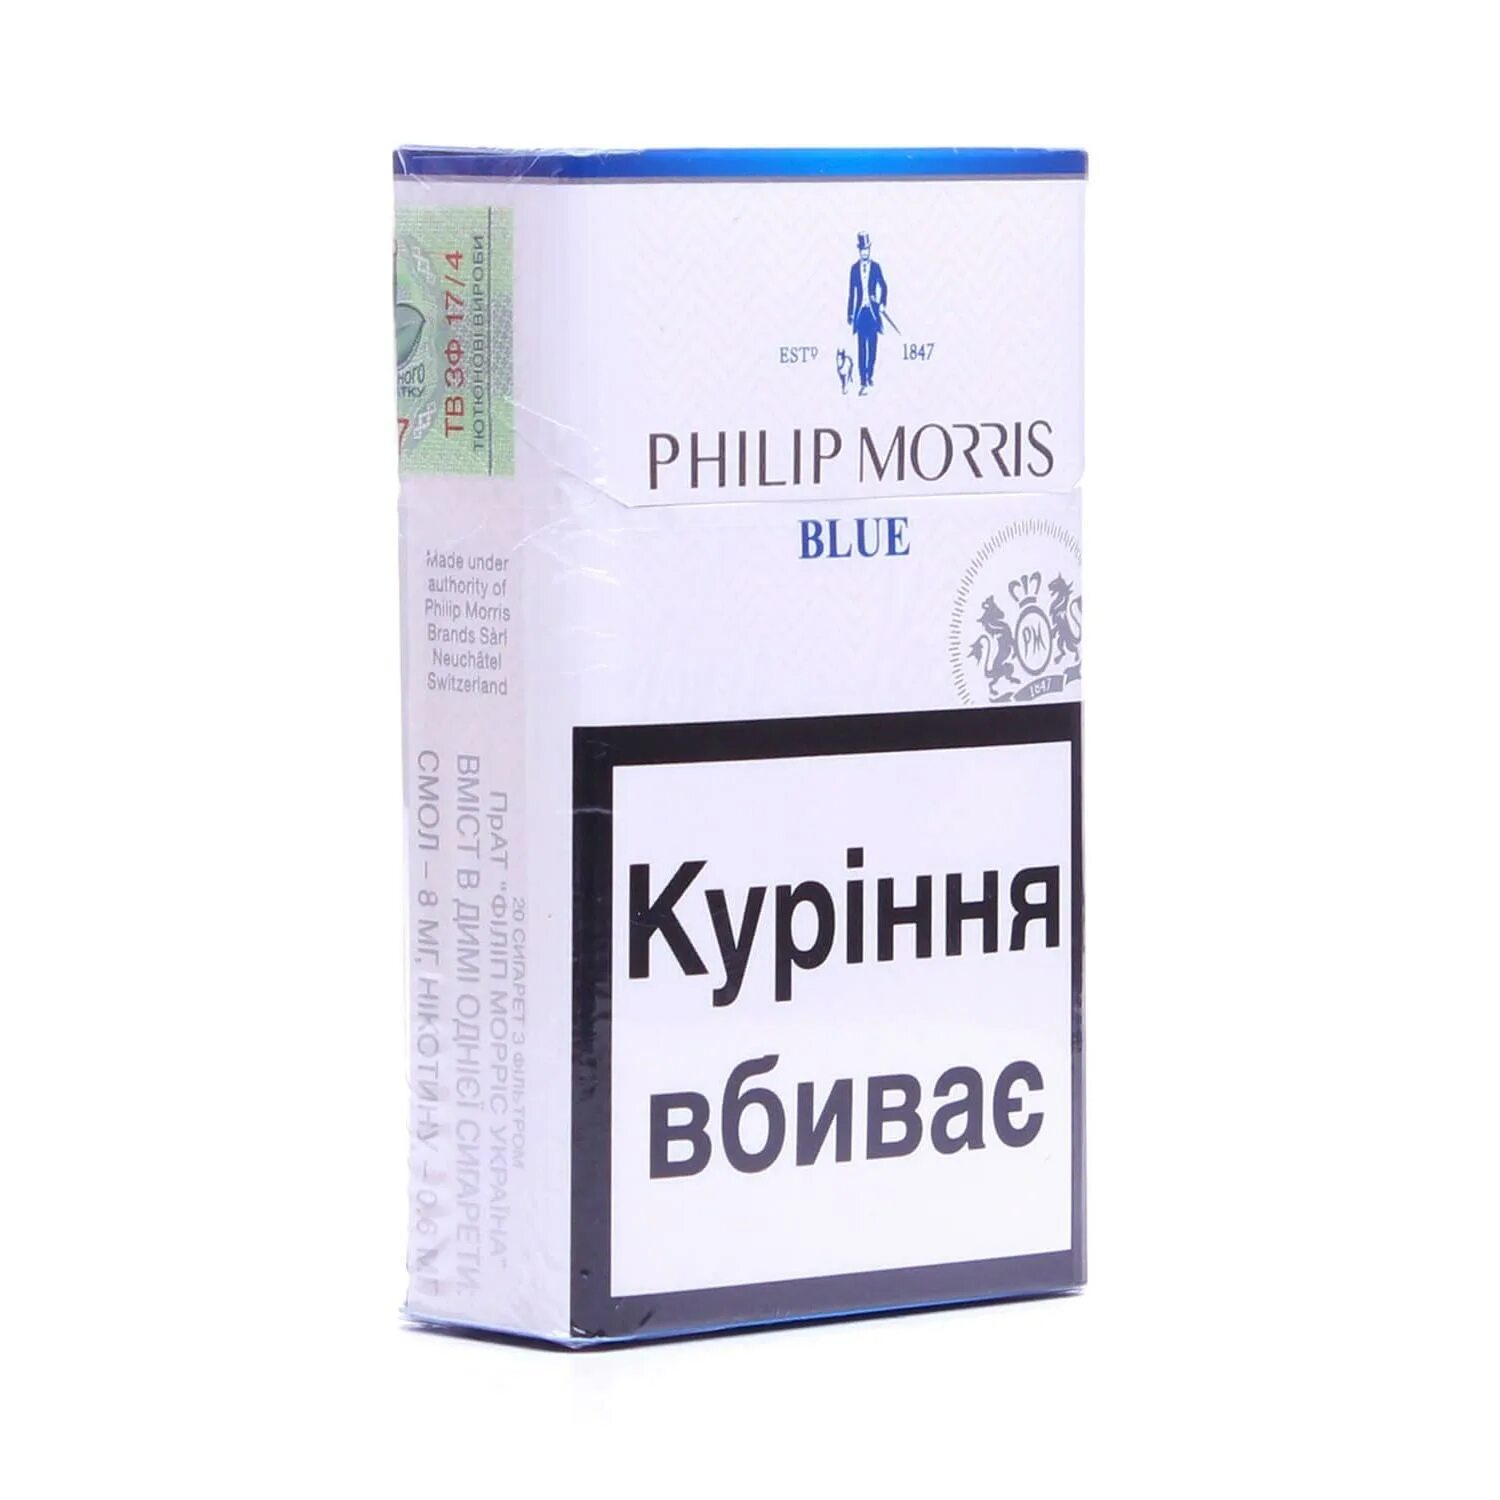 Филип Моррис сигареты. Philip Morris International сигареты. Блю Филип Филлип Моррис. Сигареты Philip Morris Blue.